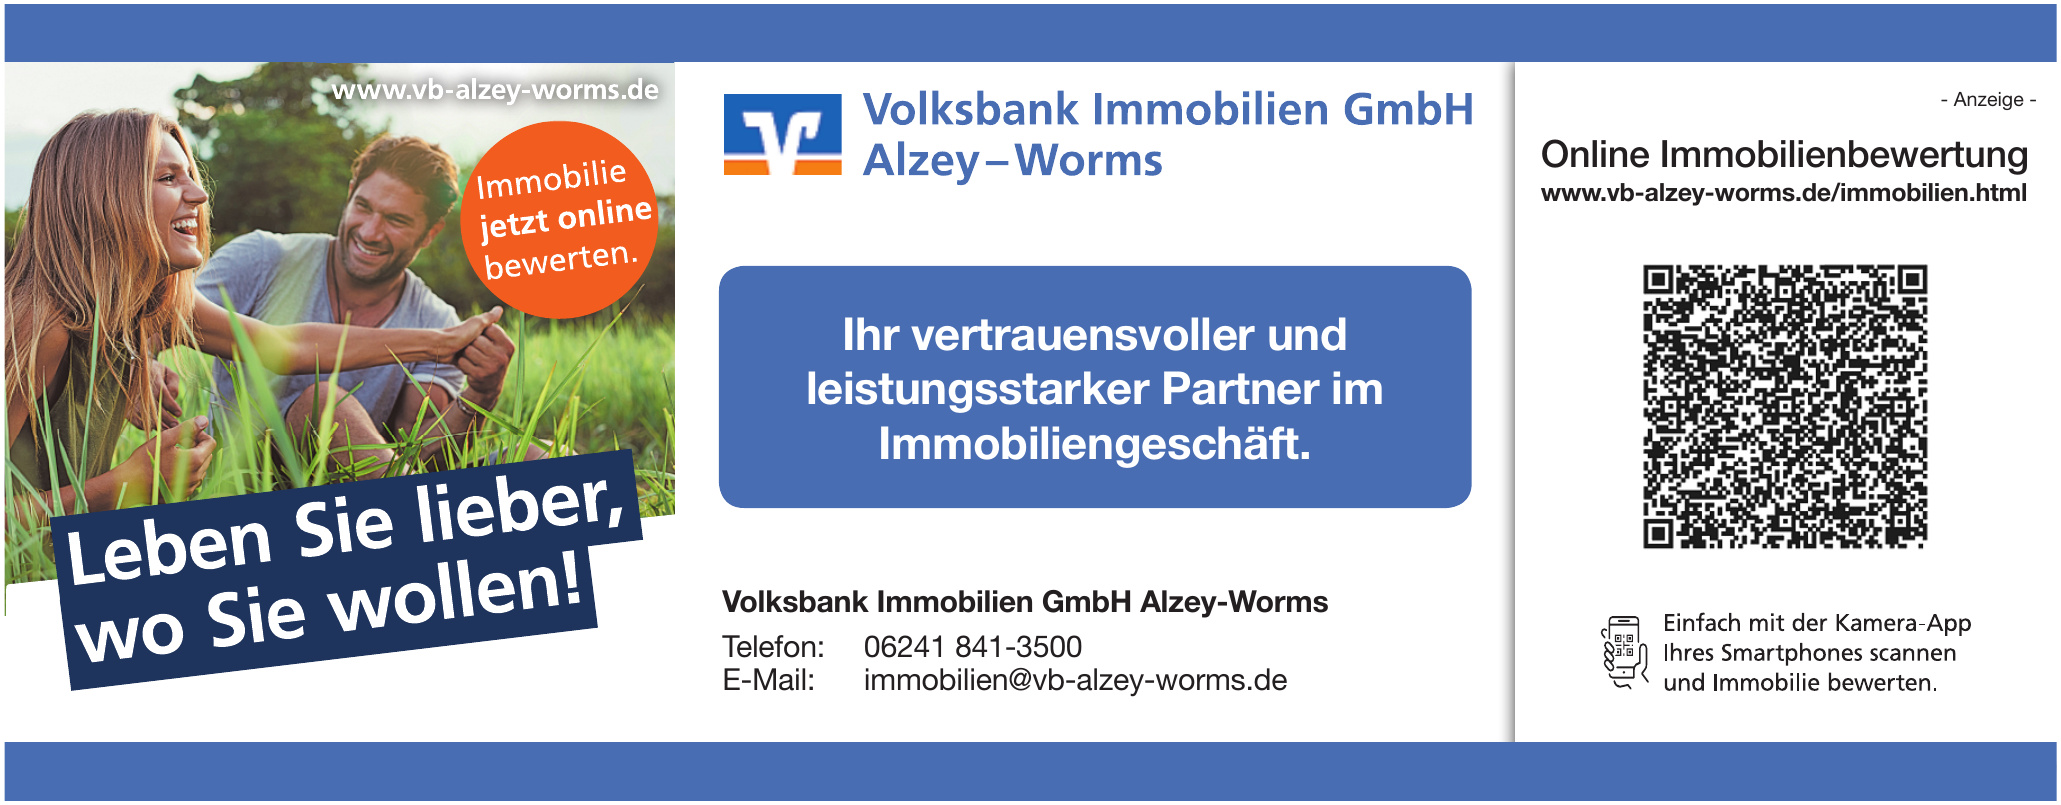 Volksbank Immobilien GmbH Alzey-Worms